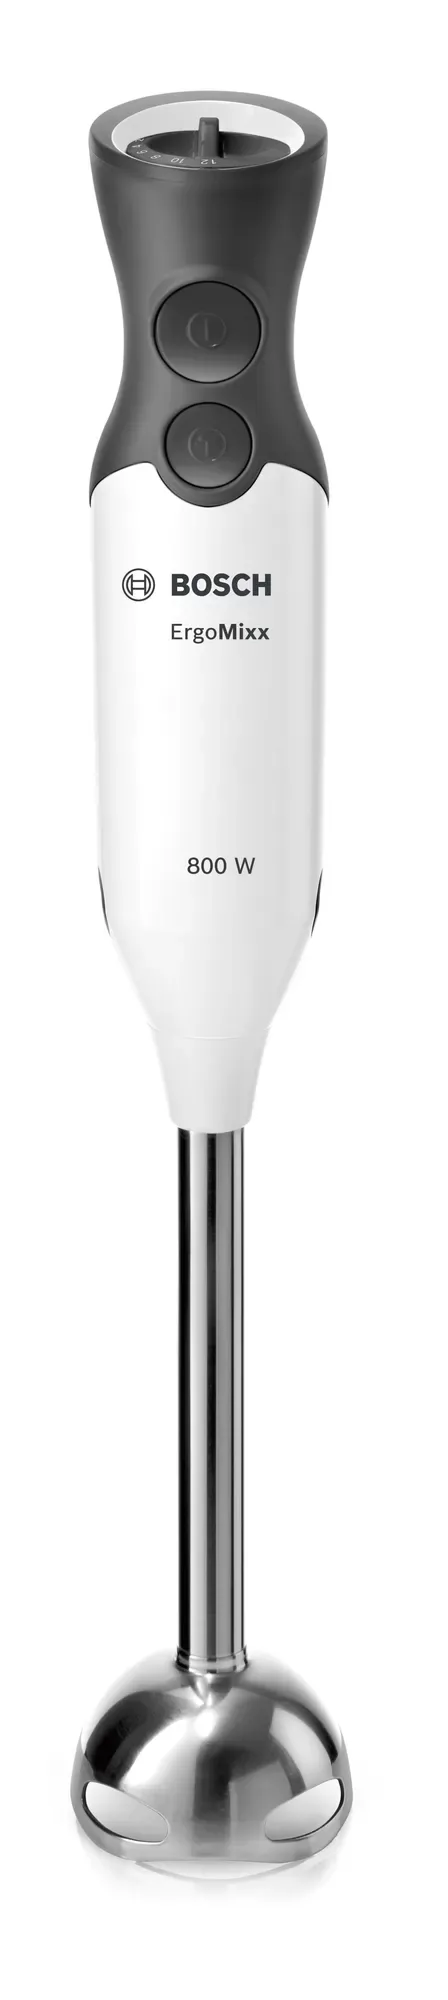 Пасатор, Bosch MS6CA4150, Blender, ErgoMixx, 800 W, Included transparent jug, chopper and stirrer, White, anthracite - image 10